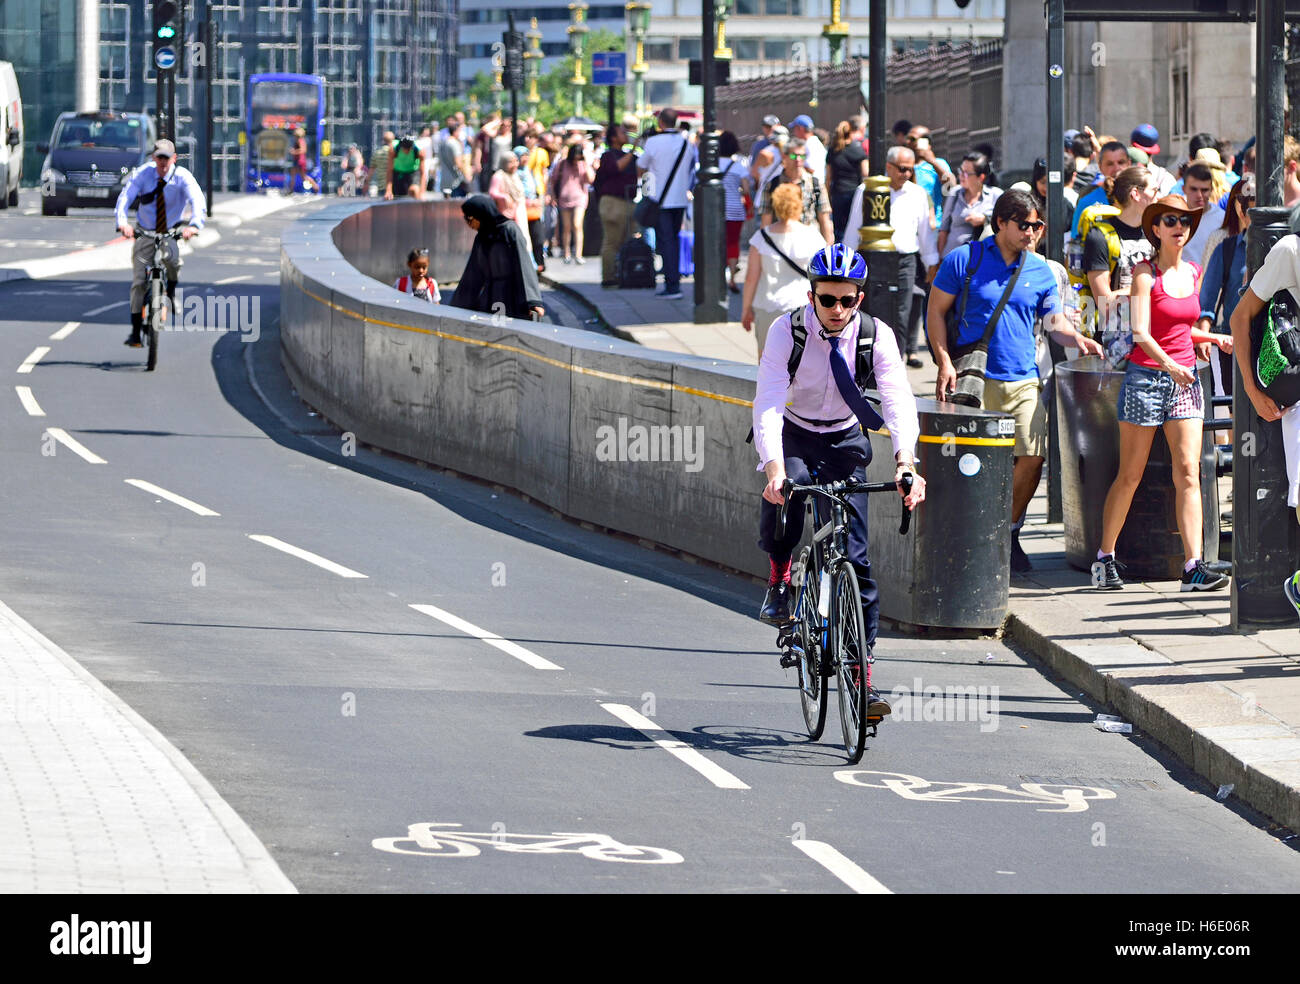 London, England, UK. Cyclists using the new cycle lane on Westminster Bridge Stock Photo